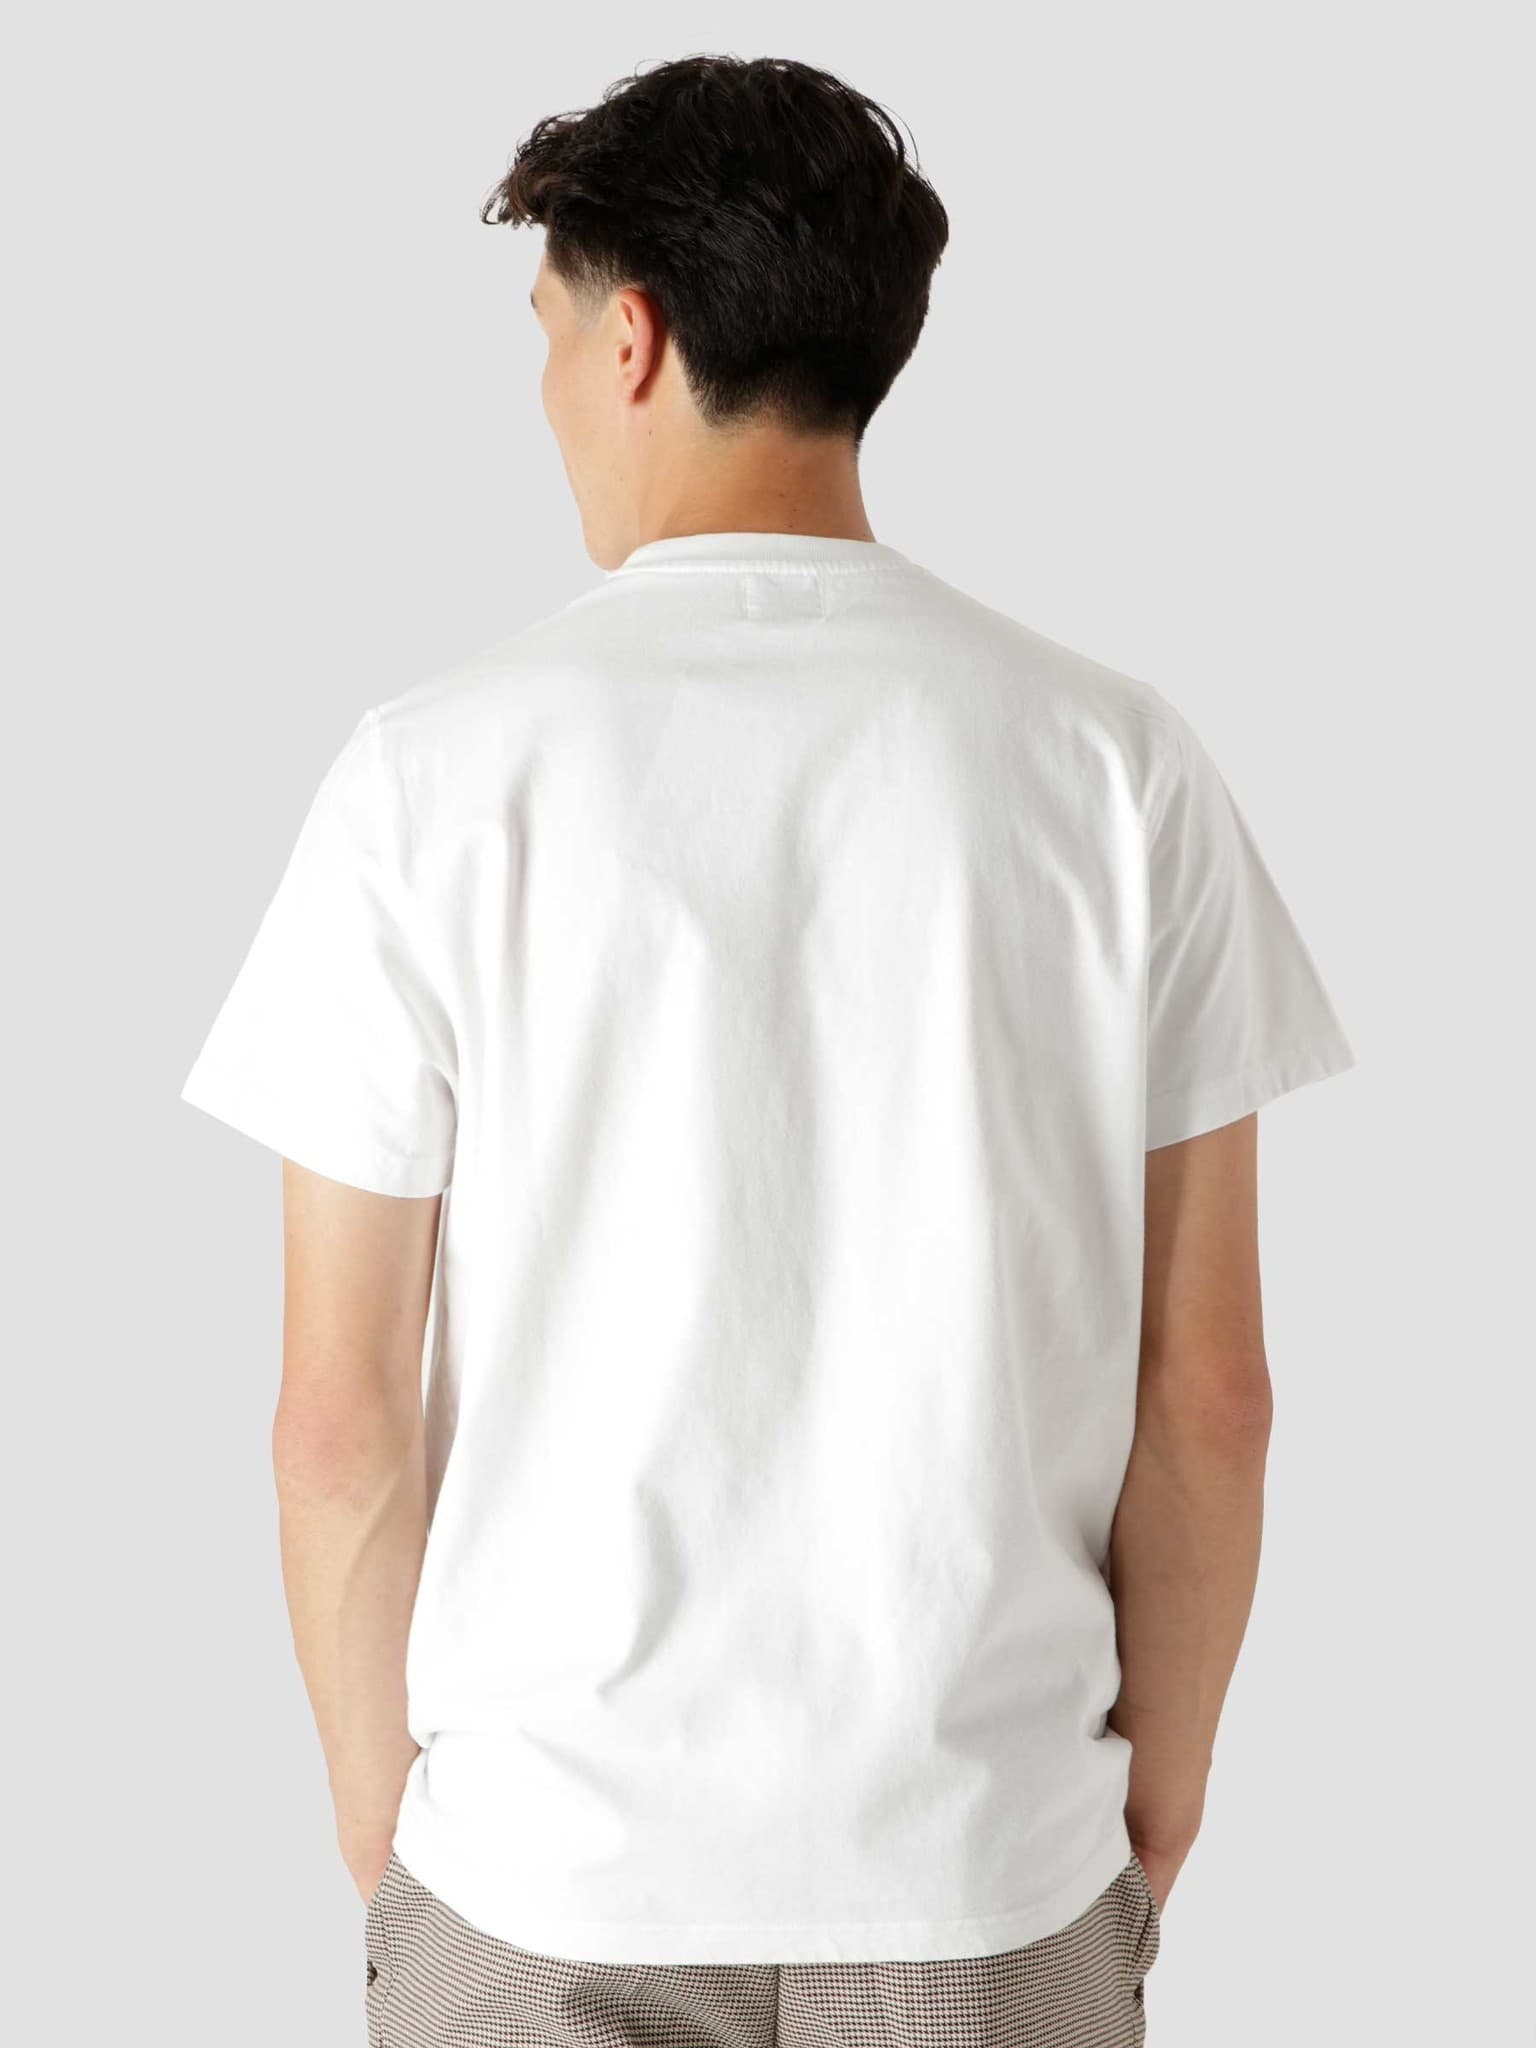 Tissot Heart T-Shirt White AW21-067T